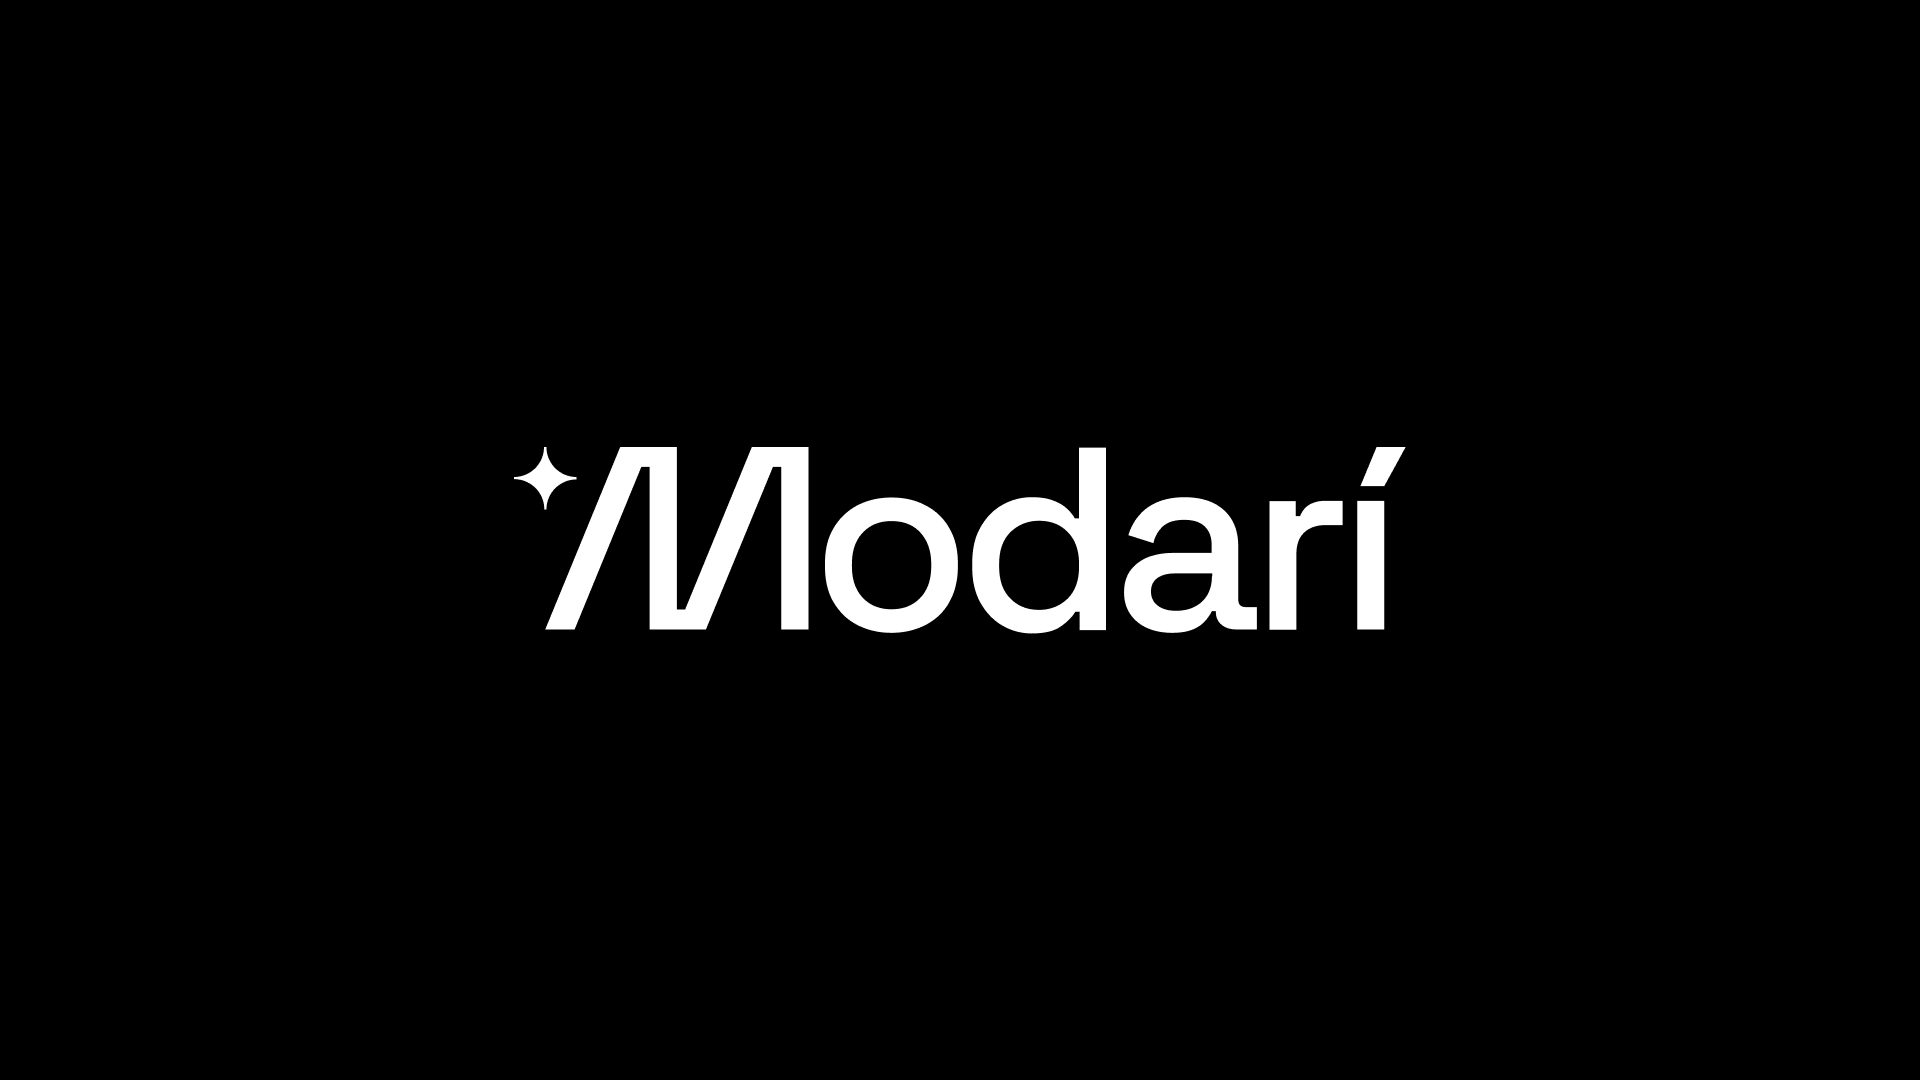 Modari: Crafting Afrocentric Elegance with Design by Abdulsamad Umar